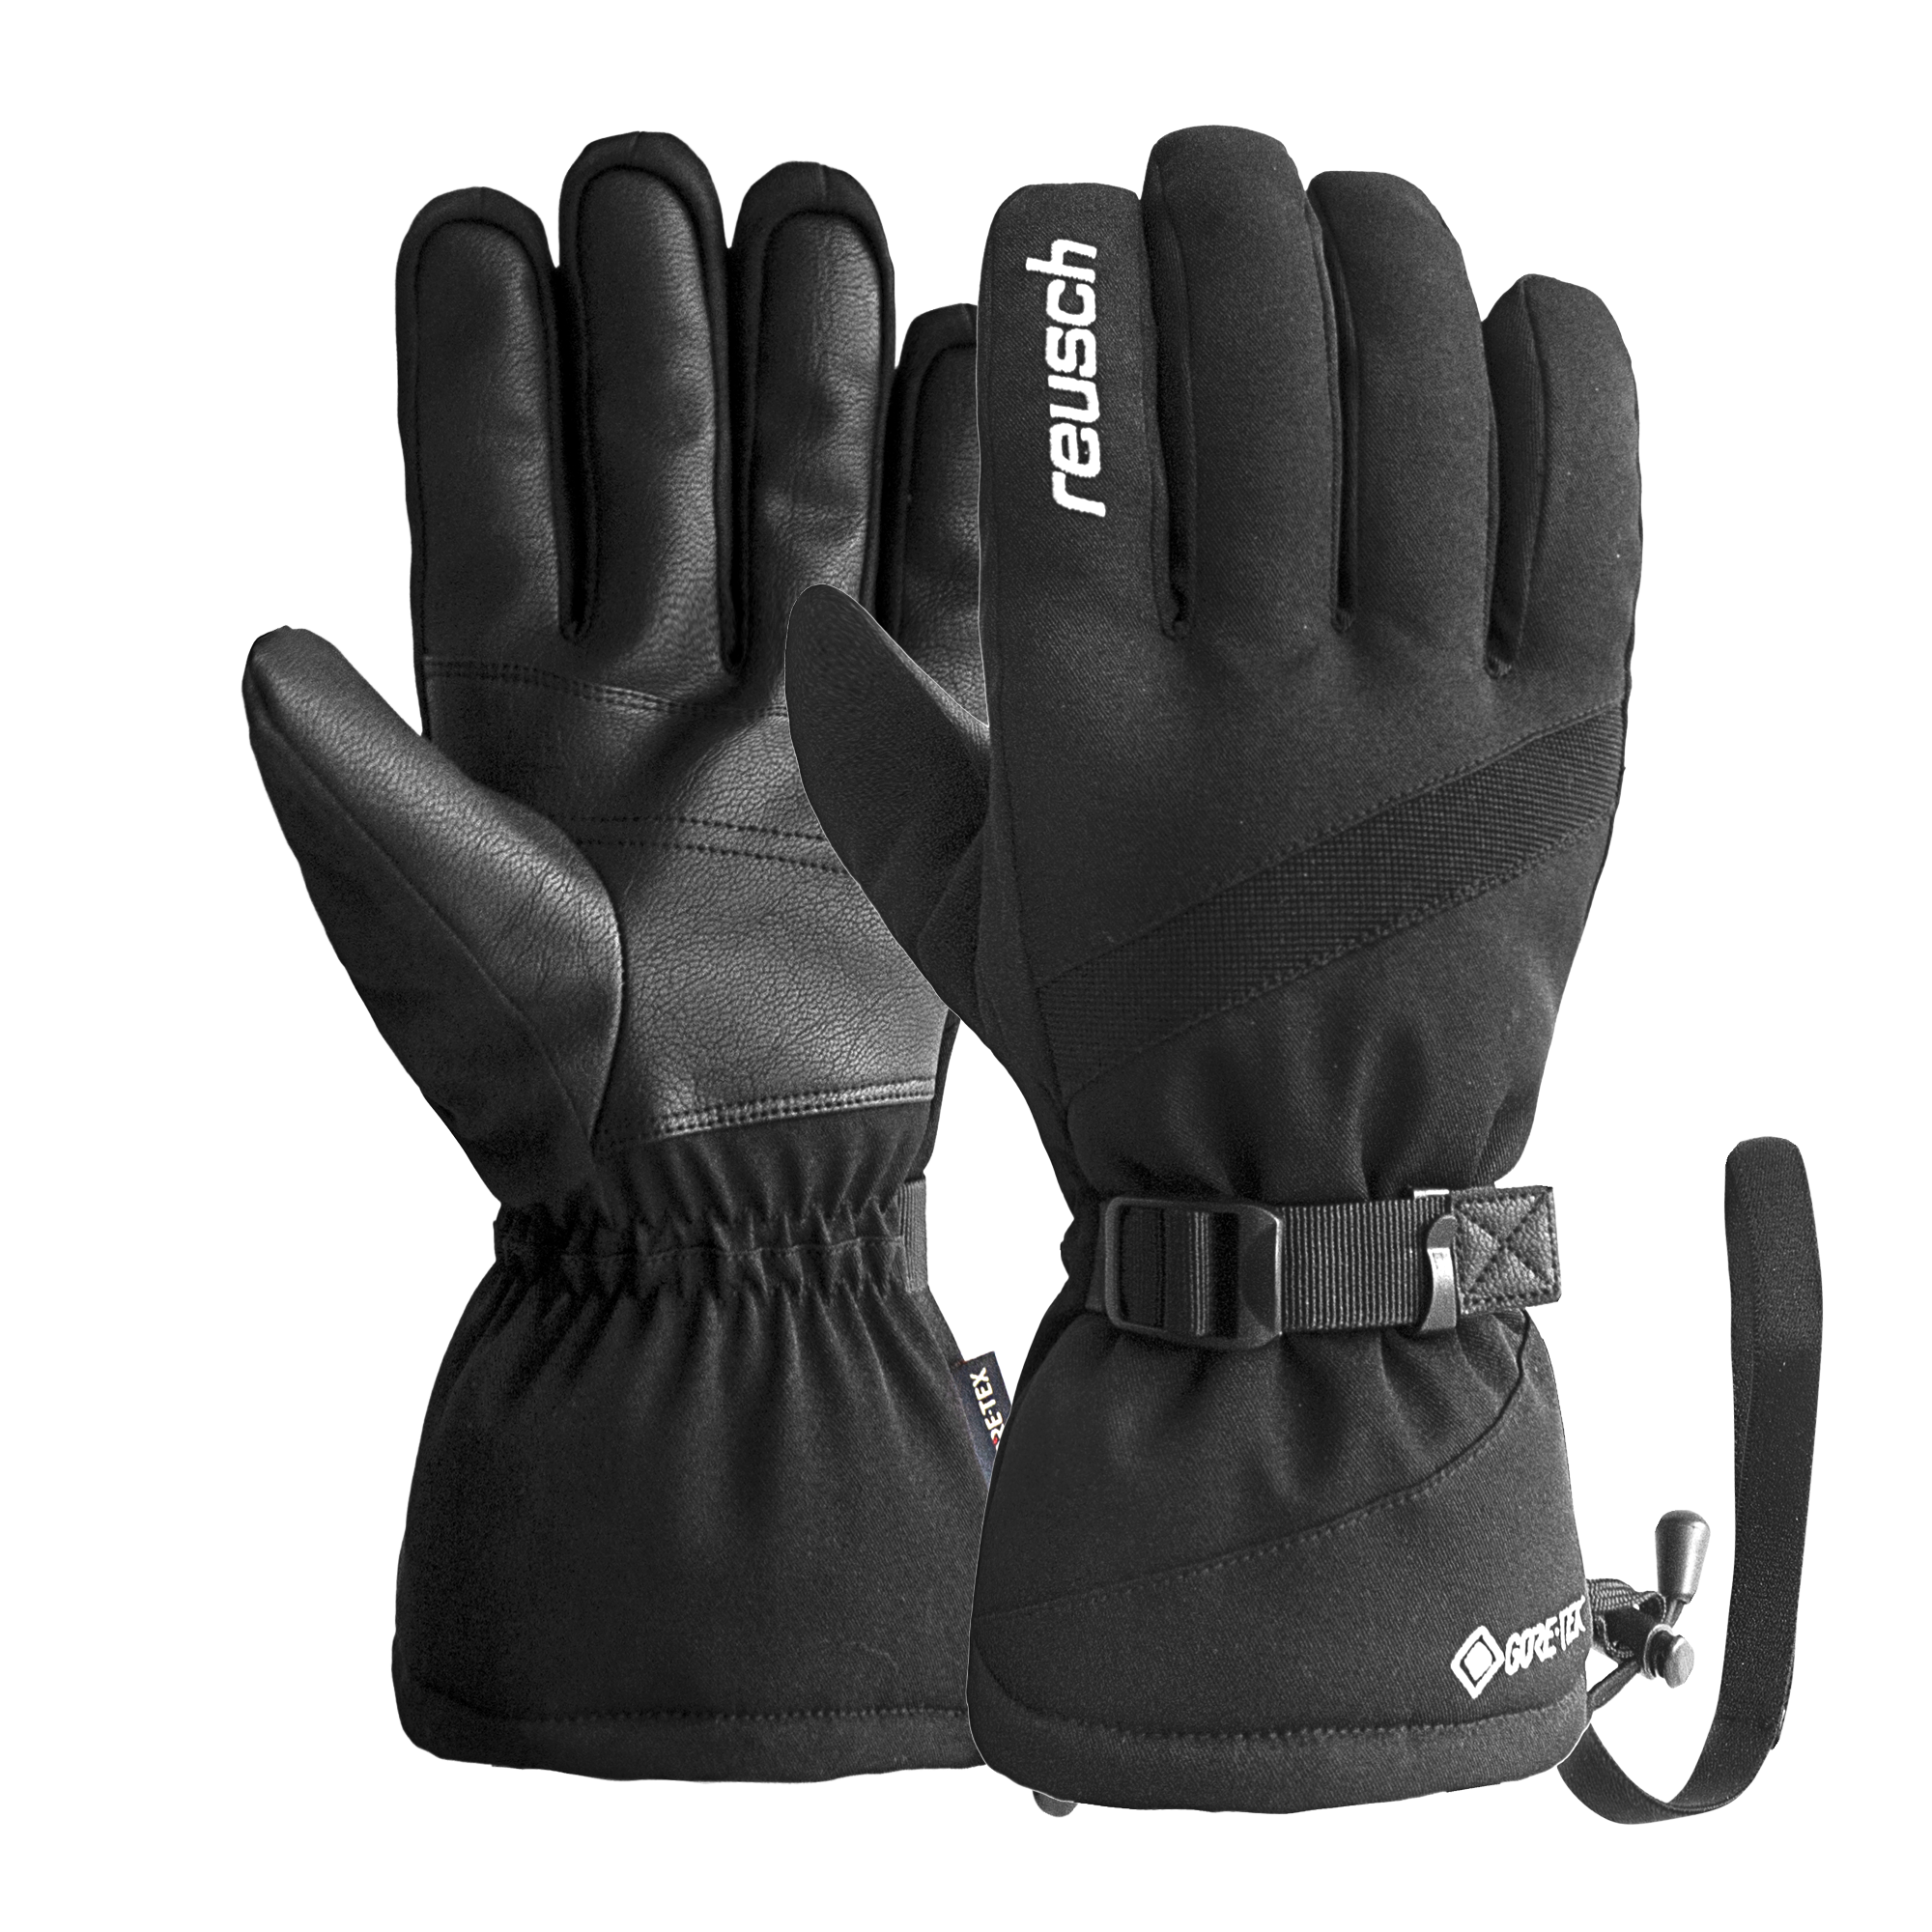 Warm Winter Reusch Glove GORE-TEX